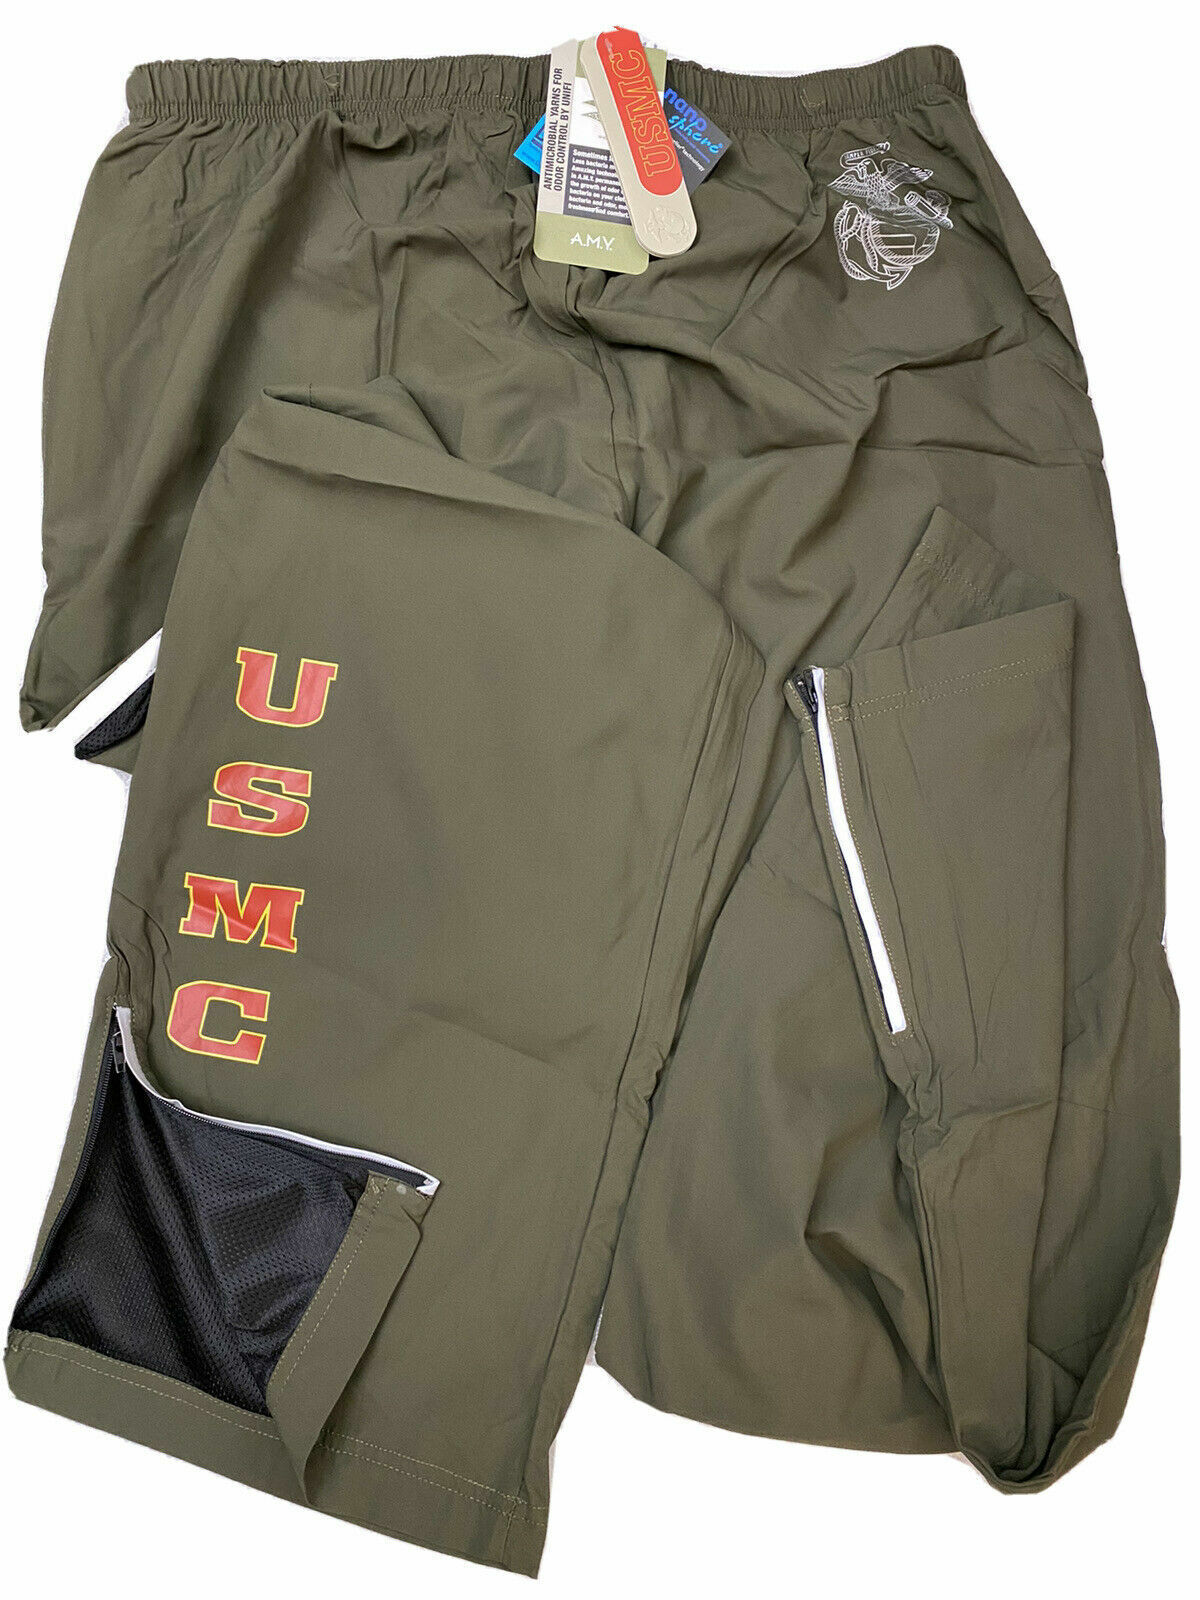 New-USMC NEW BALANCE PT / ATHLETIC PANTS U.S. MARINES SIZE XXSmall Short